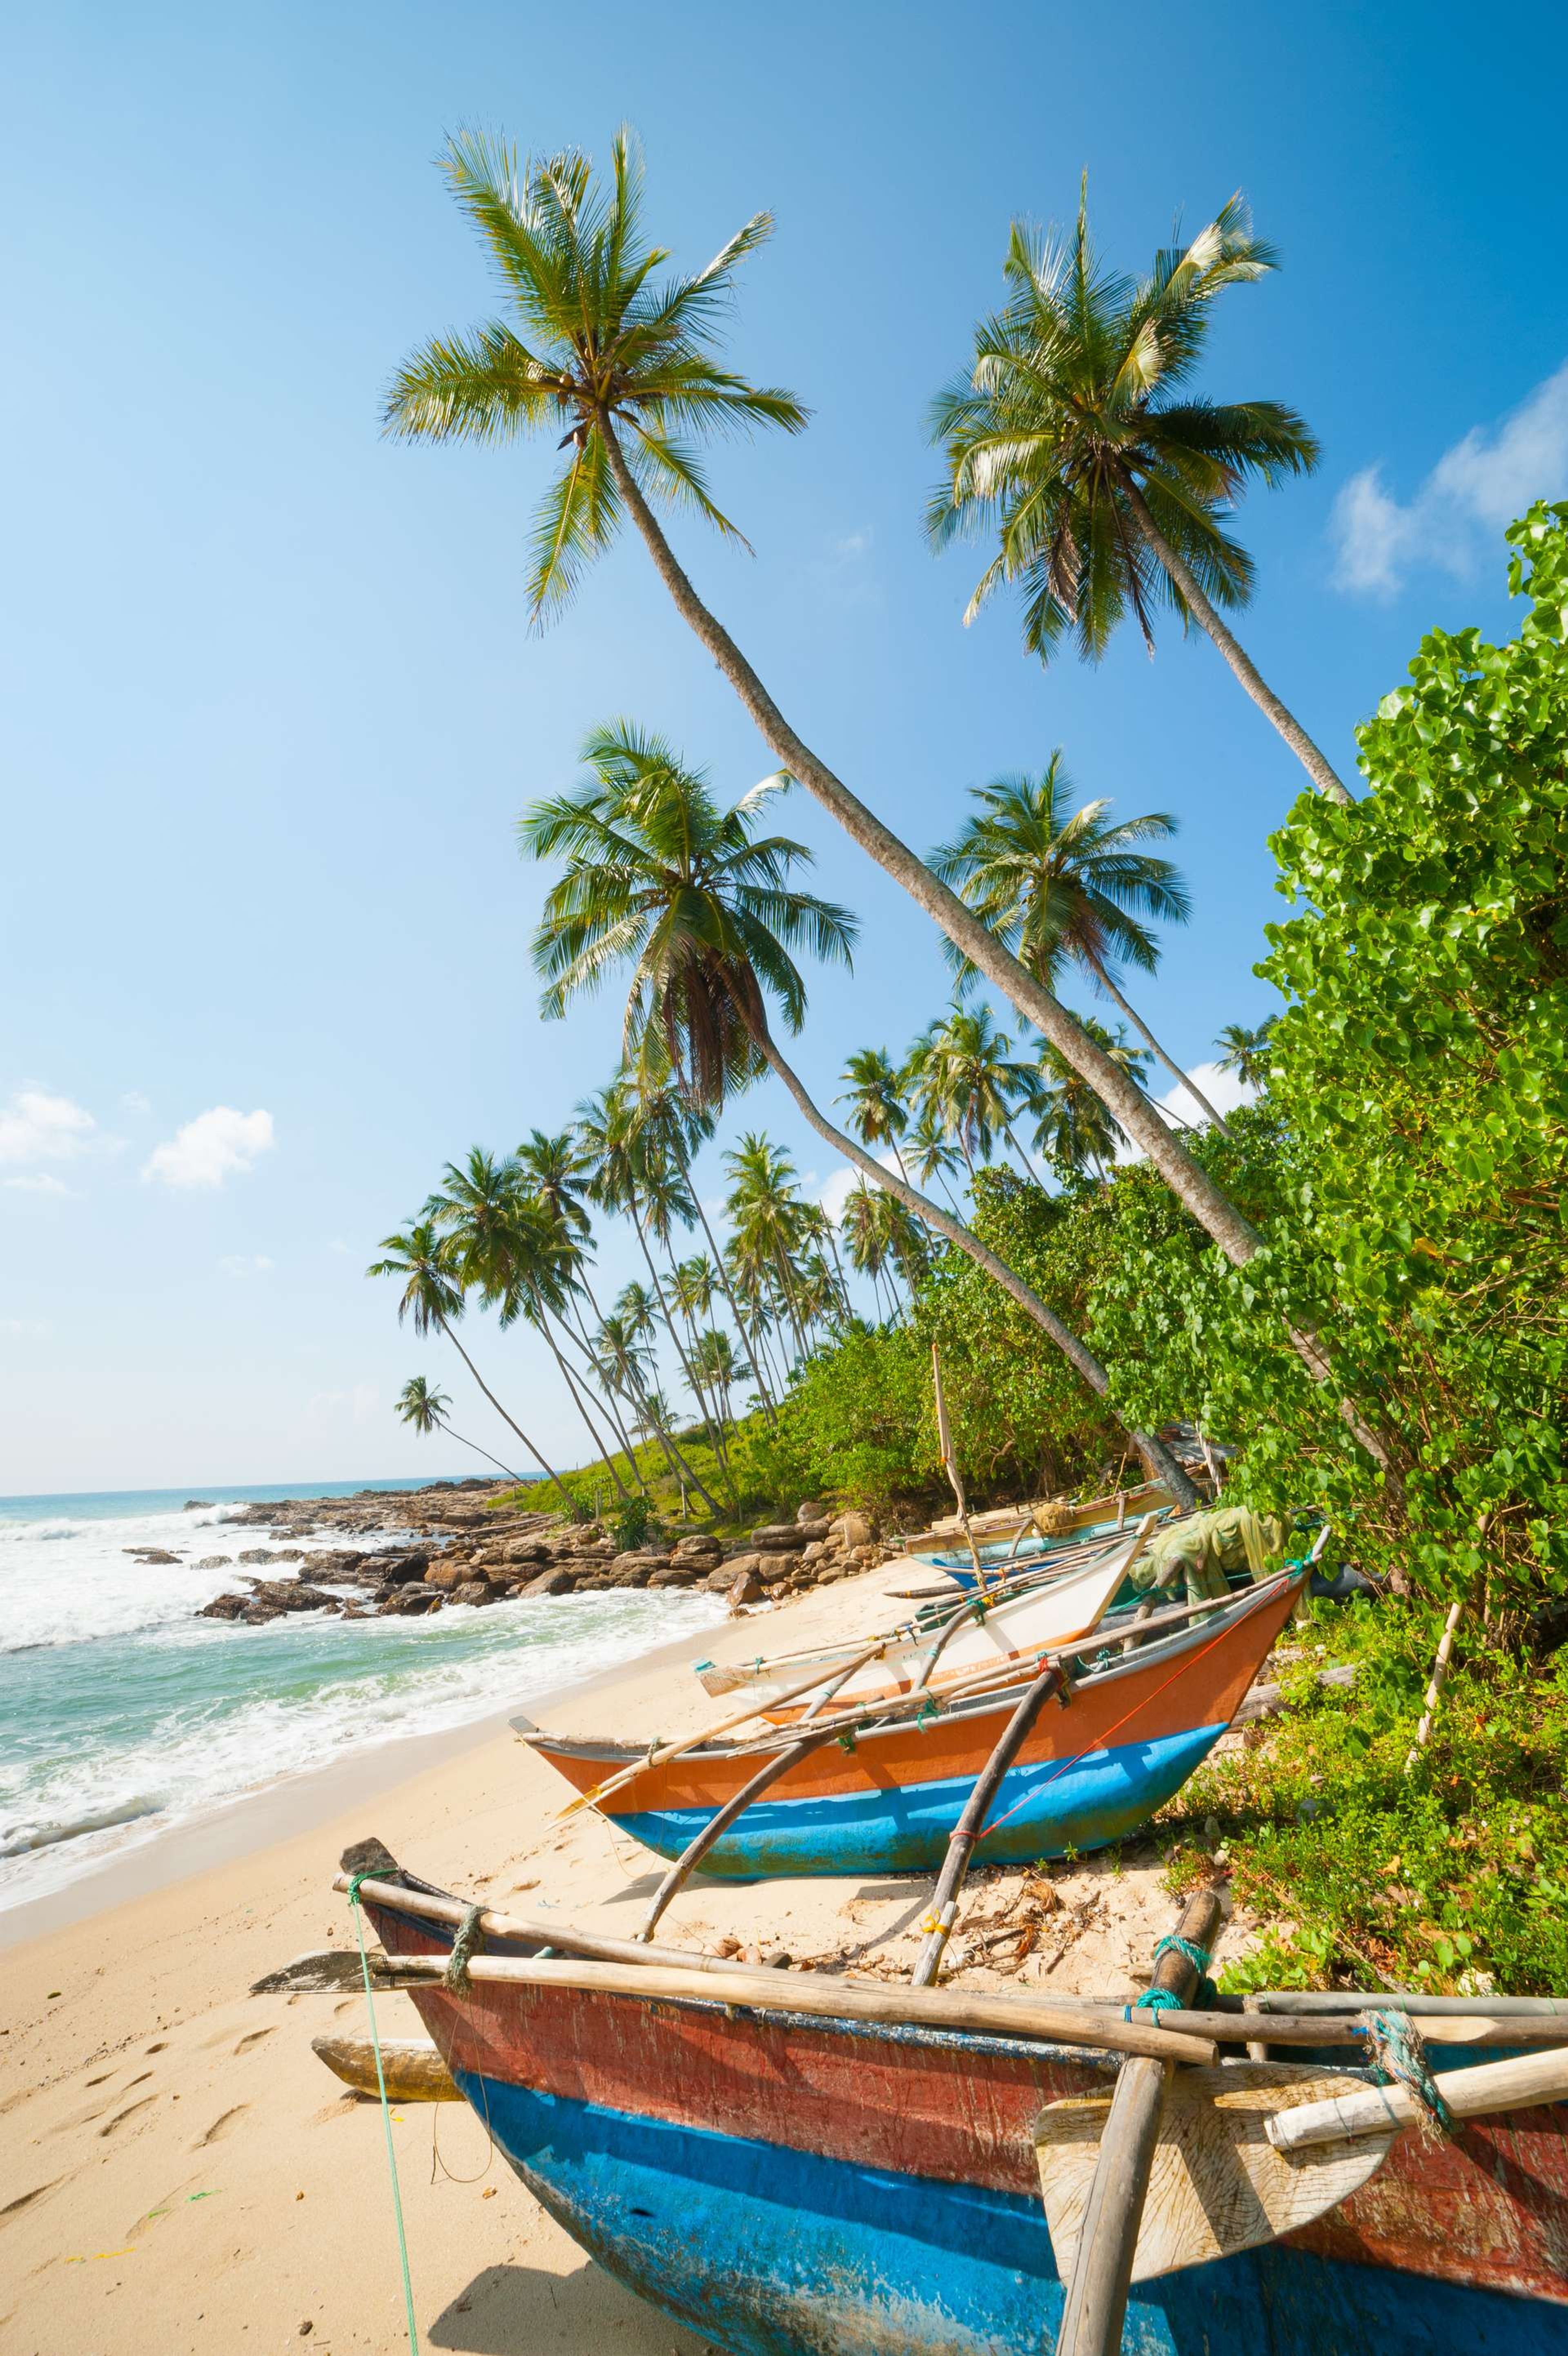 Sri Lanka tropical beach with palms and fishing boats